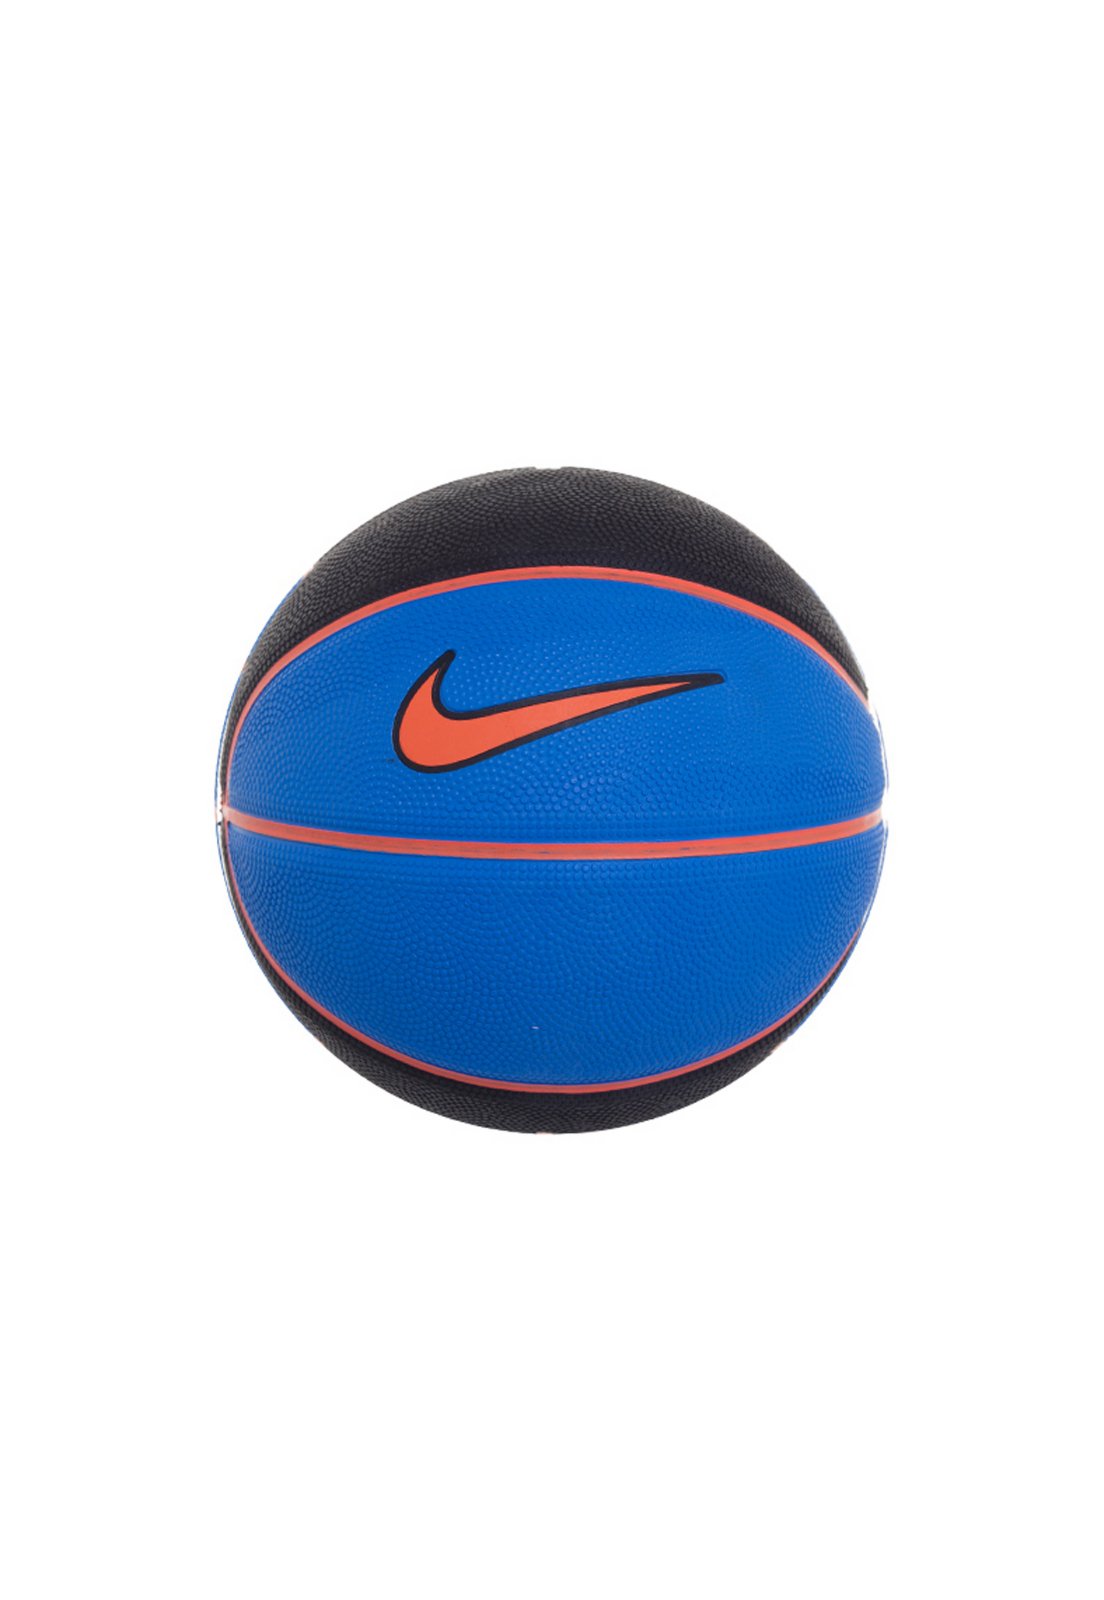 Bola de Basquete Nike Swoosh Mini Azul - Tamanho 3